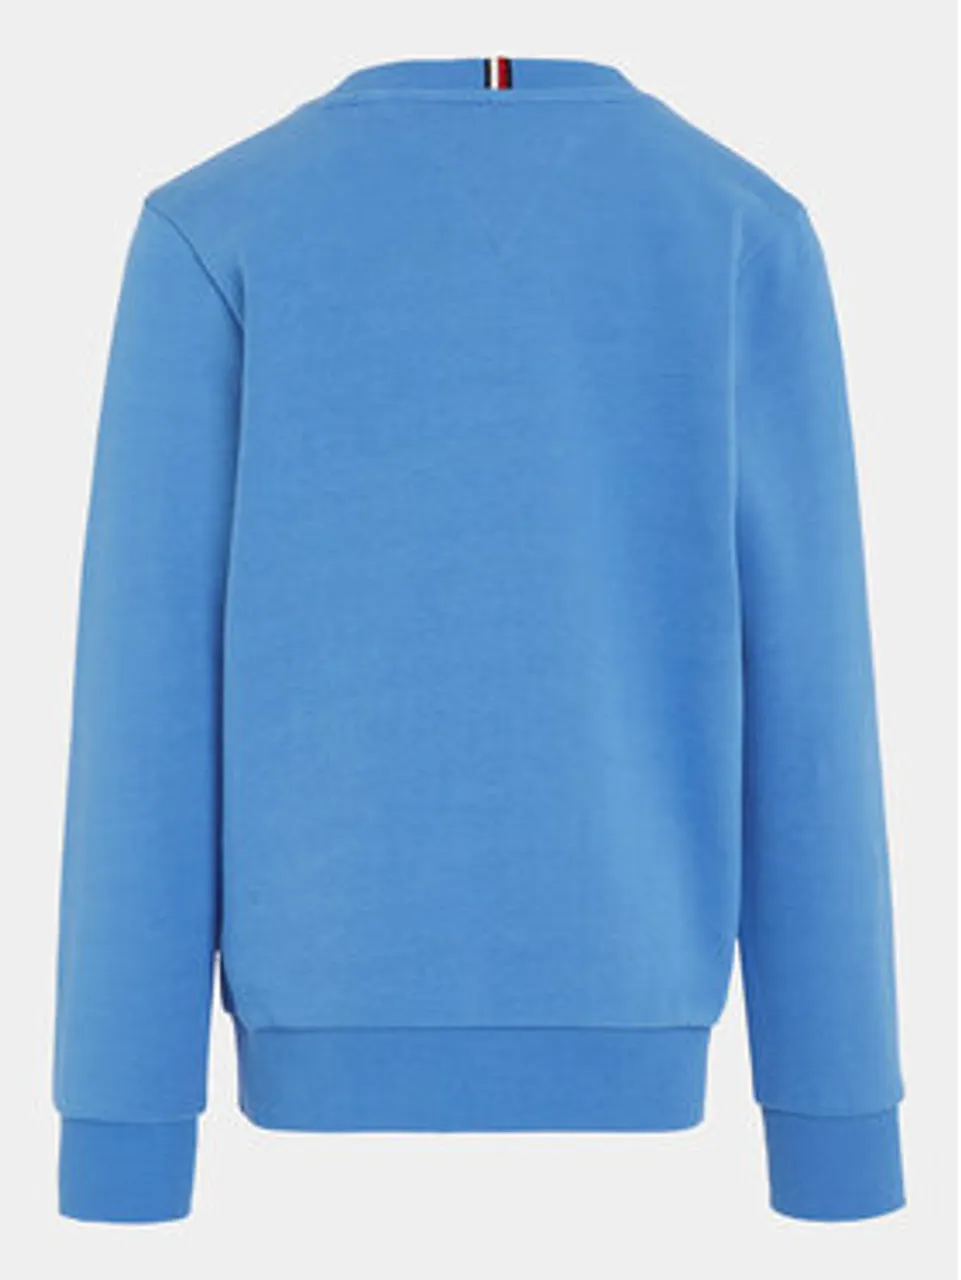 Tommy Hilfiger Sweatshirt 1985 KB0KB09000 Blau Regular Fit